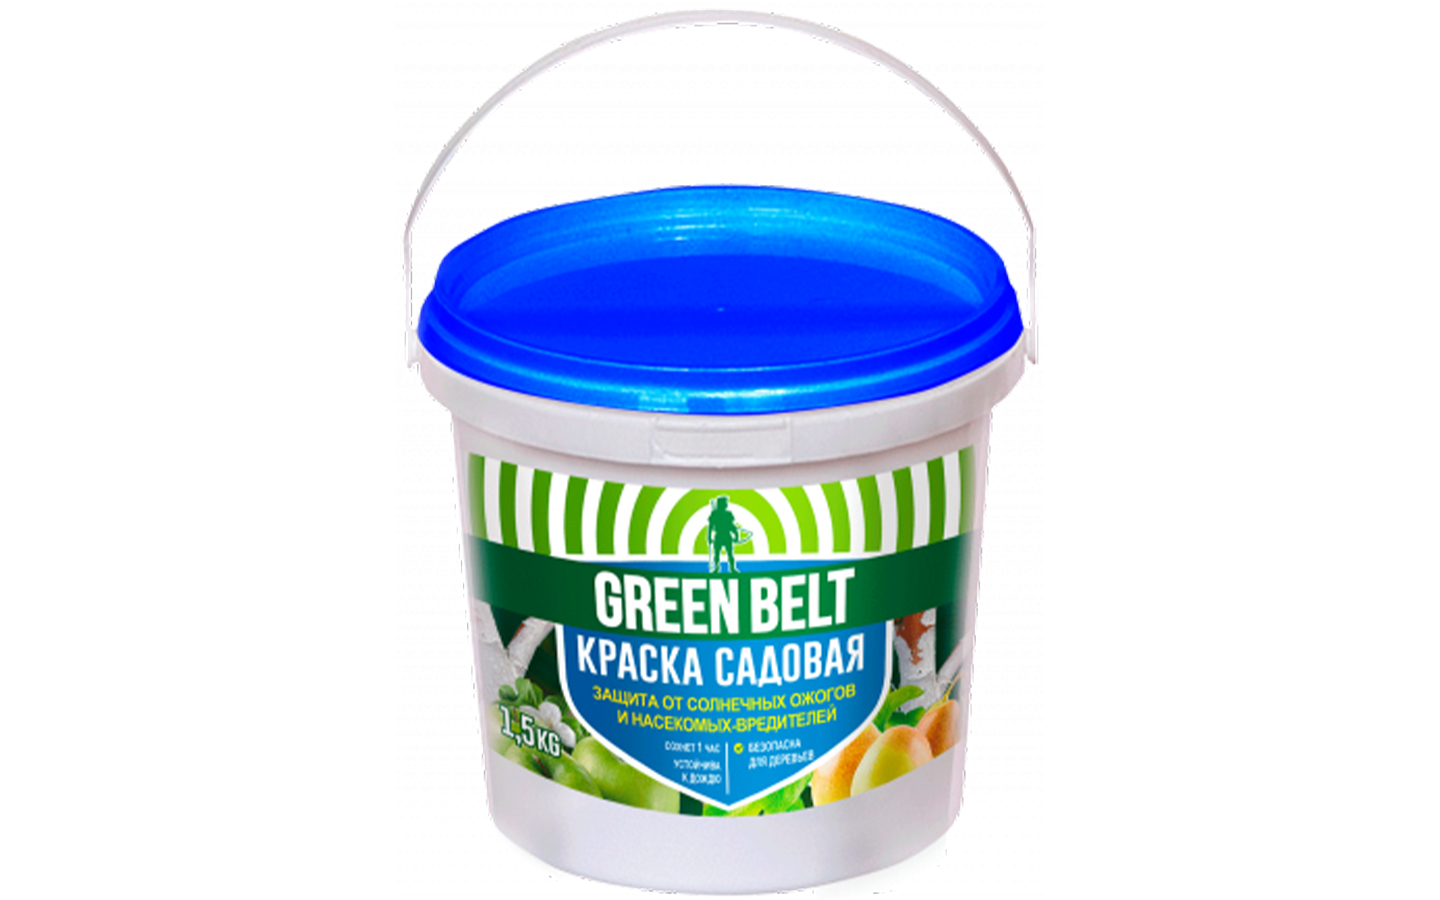 GREEN BELT Краска садовая, ведерко 1,5 кг, 01-493